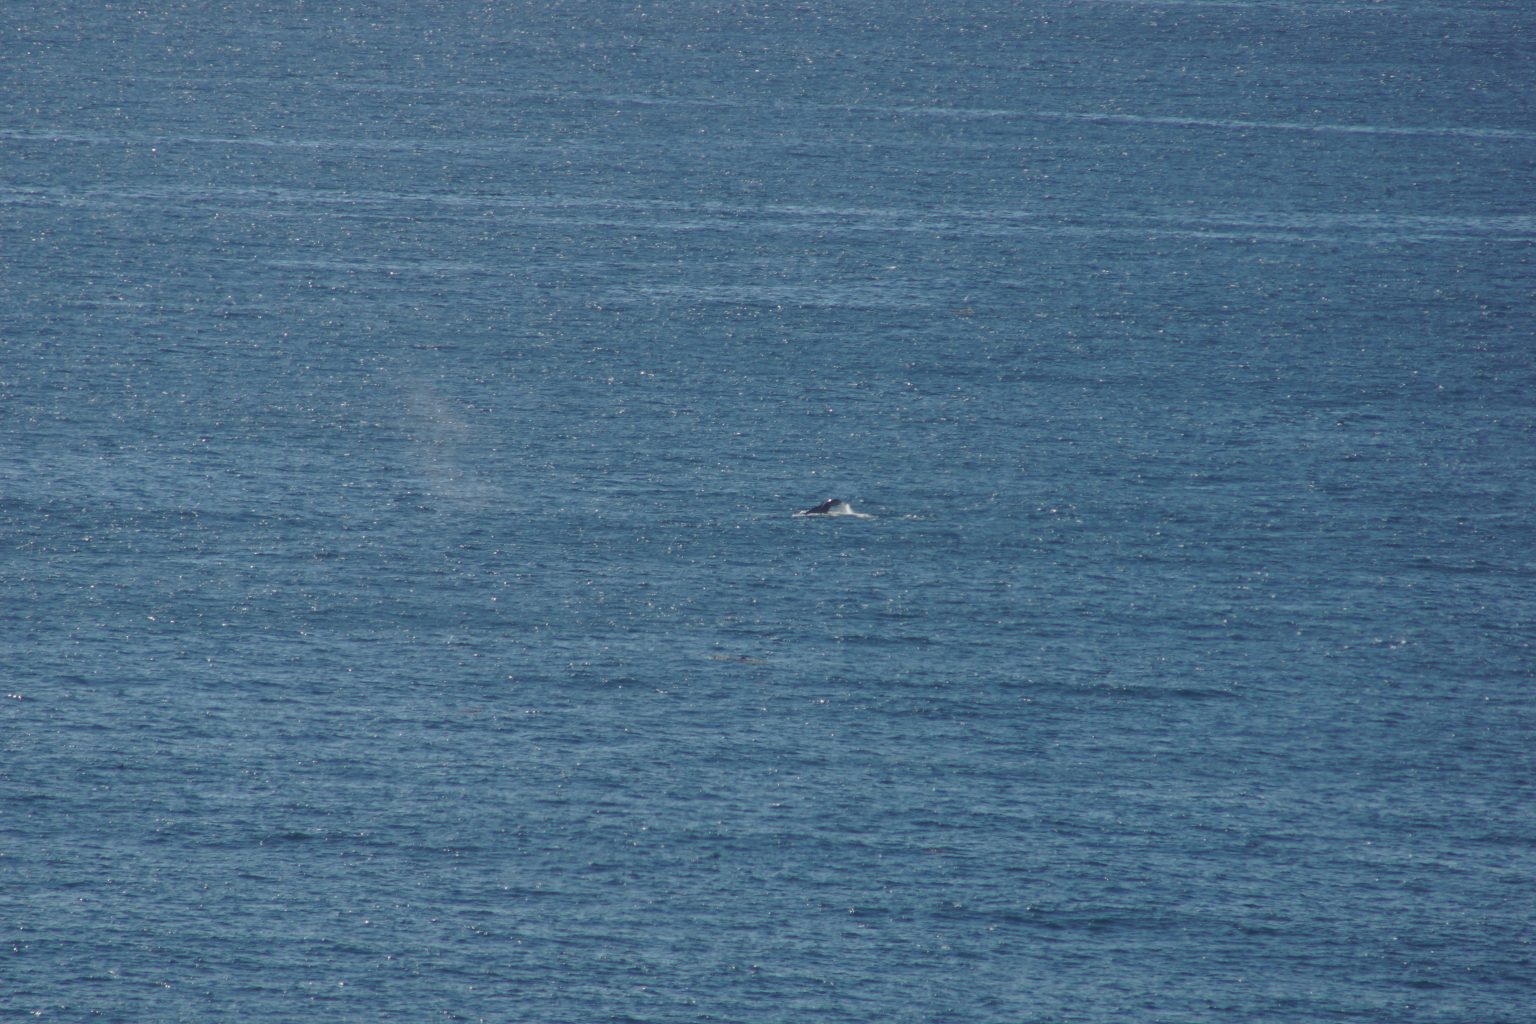 More whales. 2015-Dec 27th